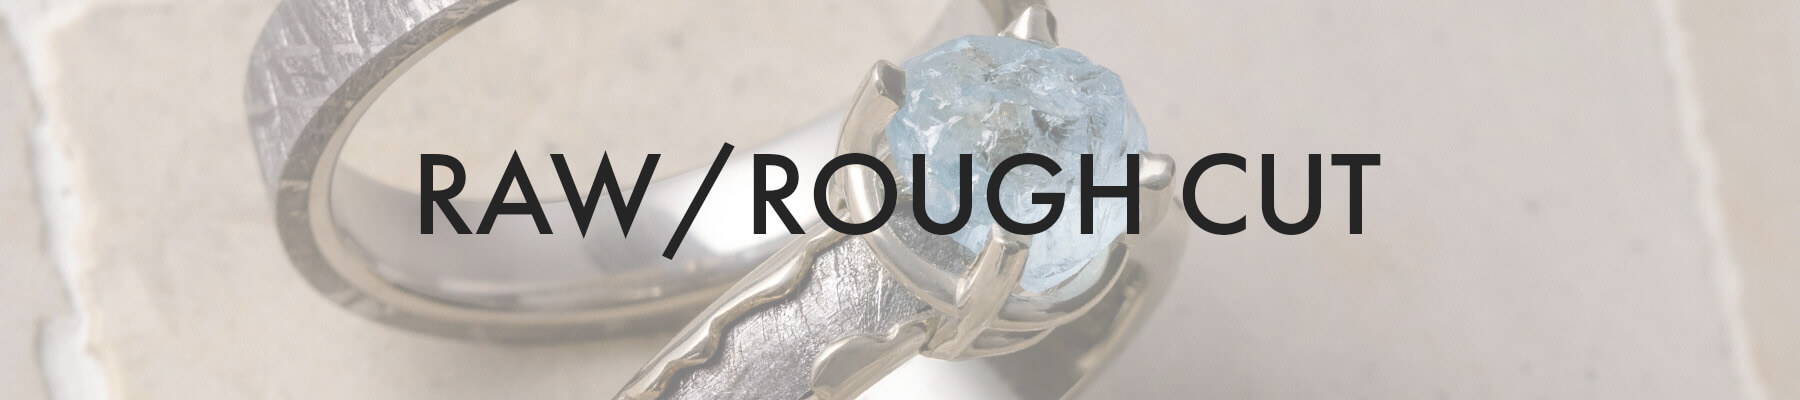 Rough Cut Engagement Ring (SKU 3416)